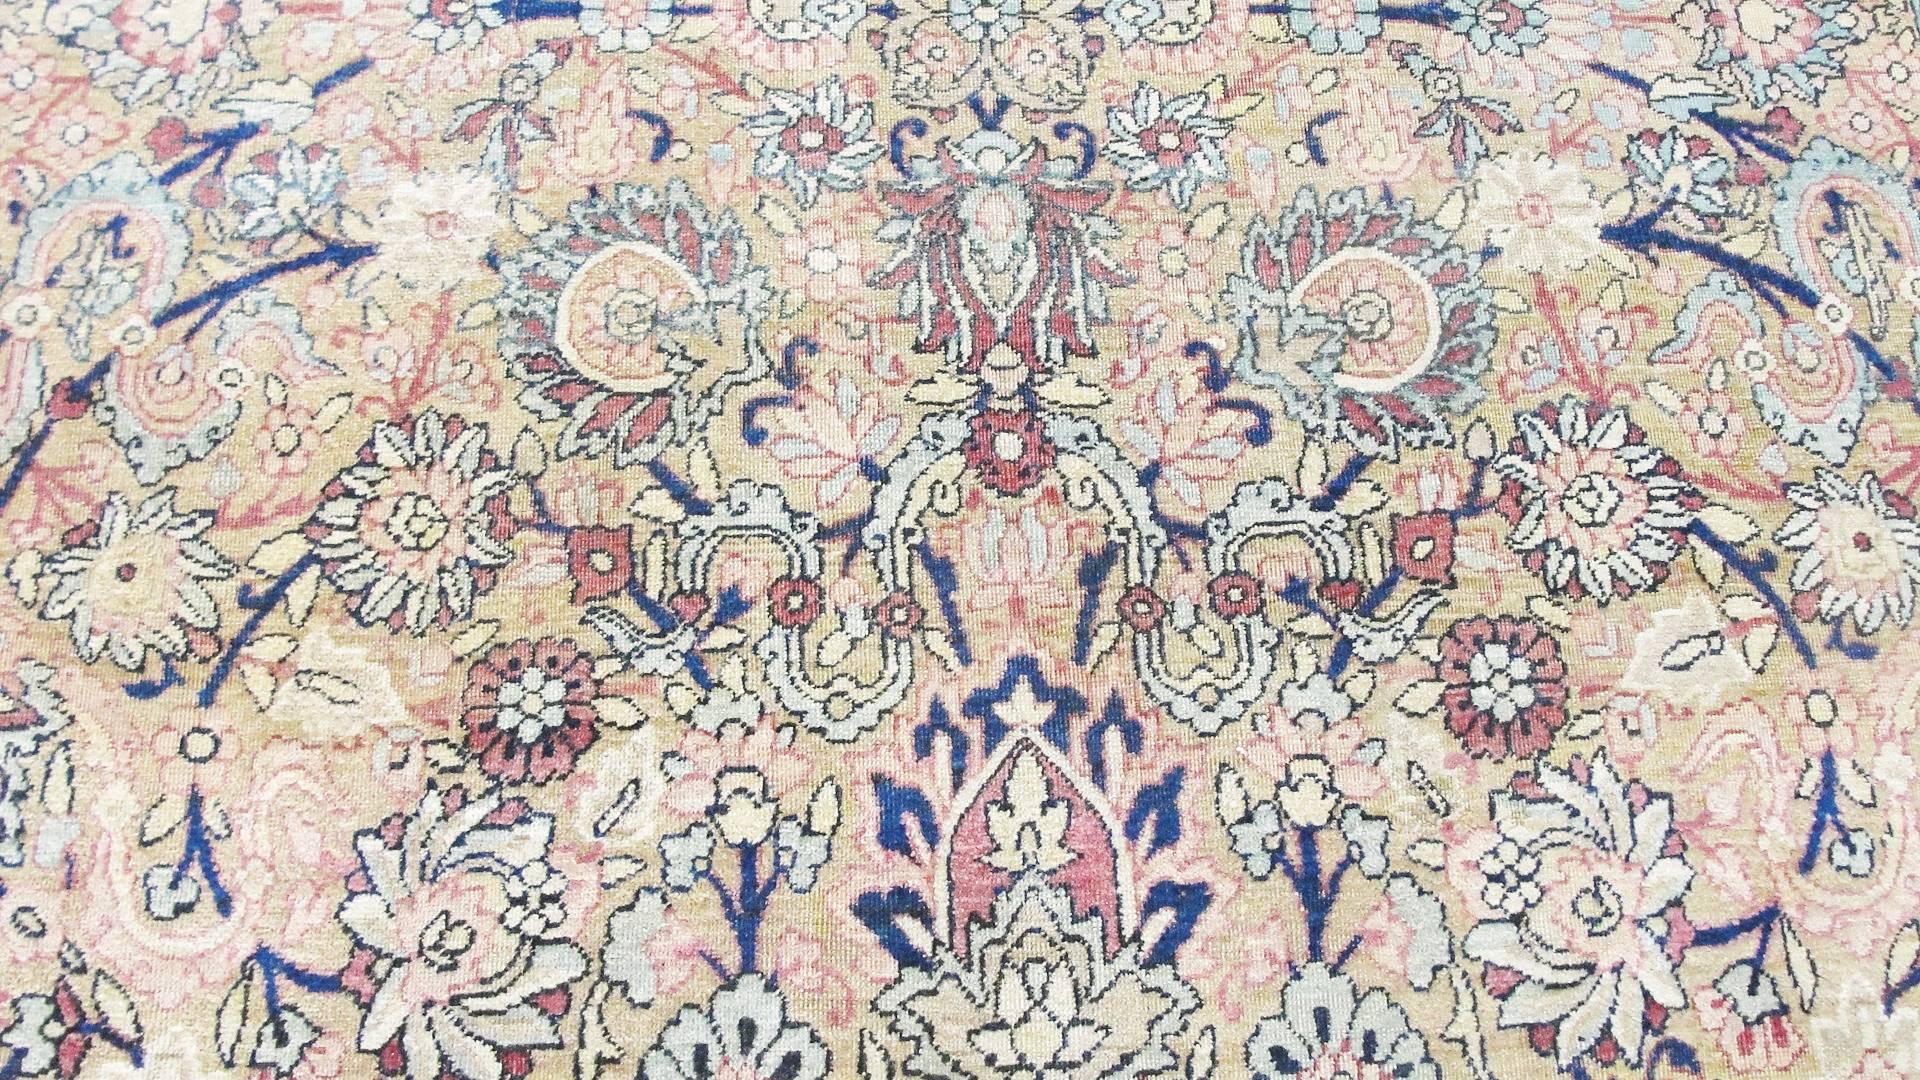  Antique Persian Kermanshah Carpet, 5'5